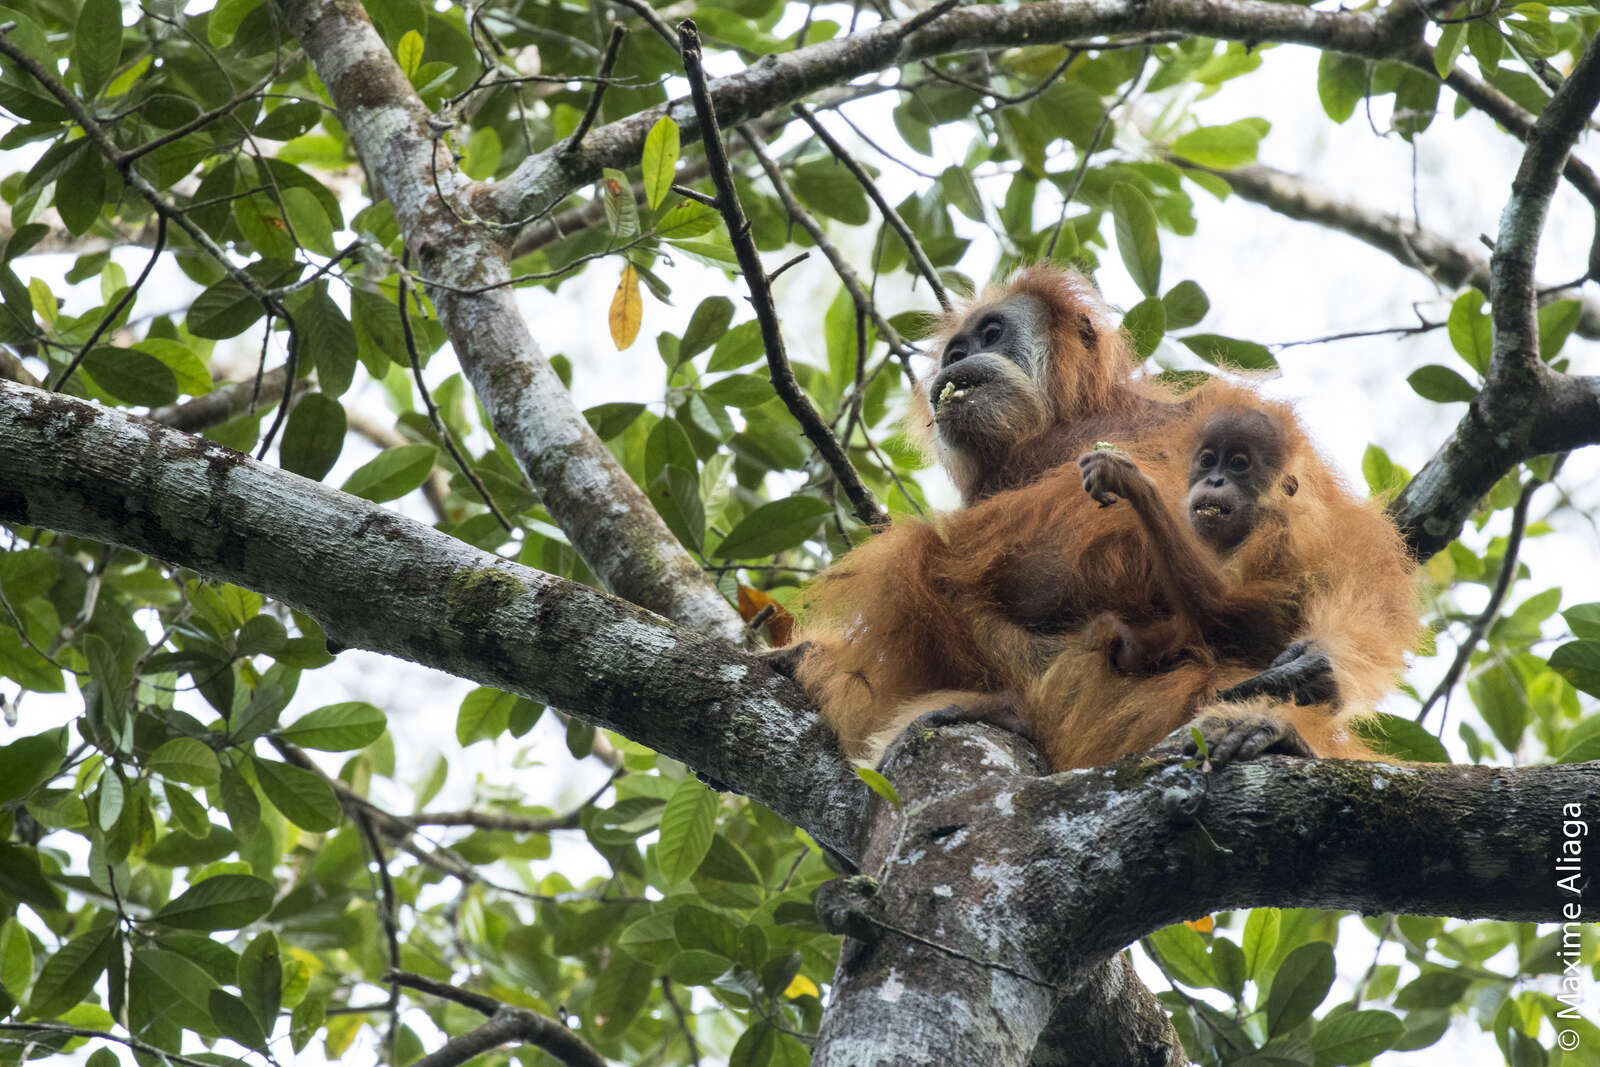 Newly discovered Tapanuli orangutan in Indonesia